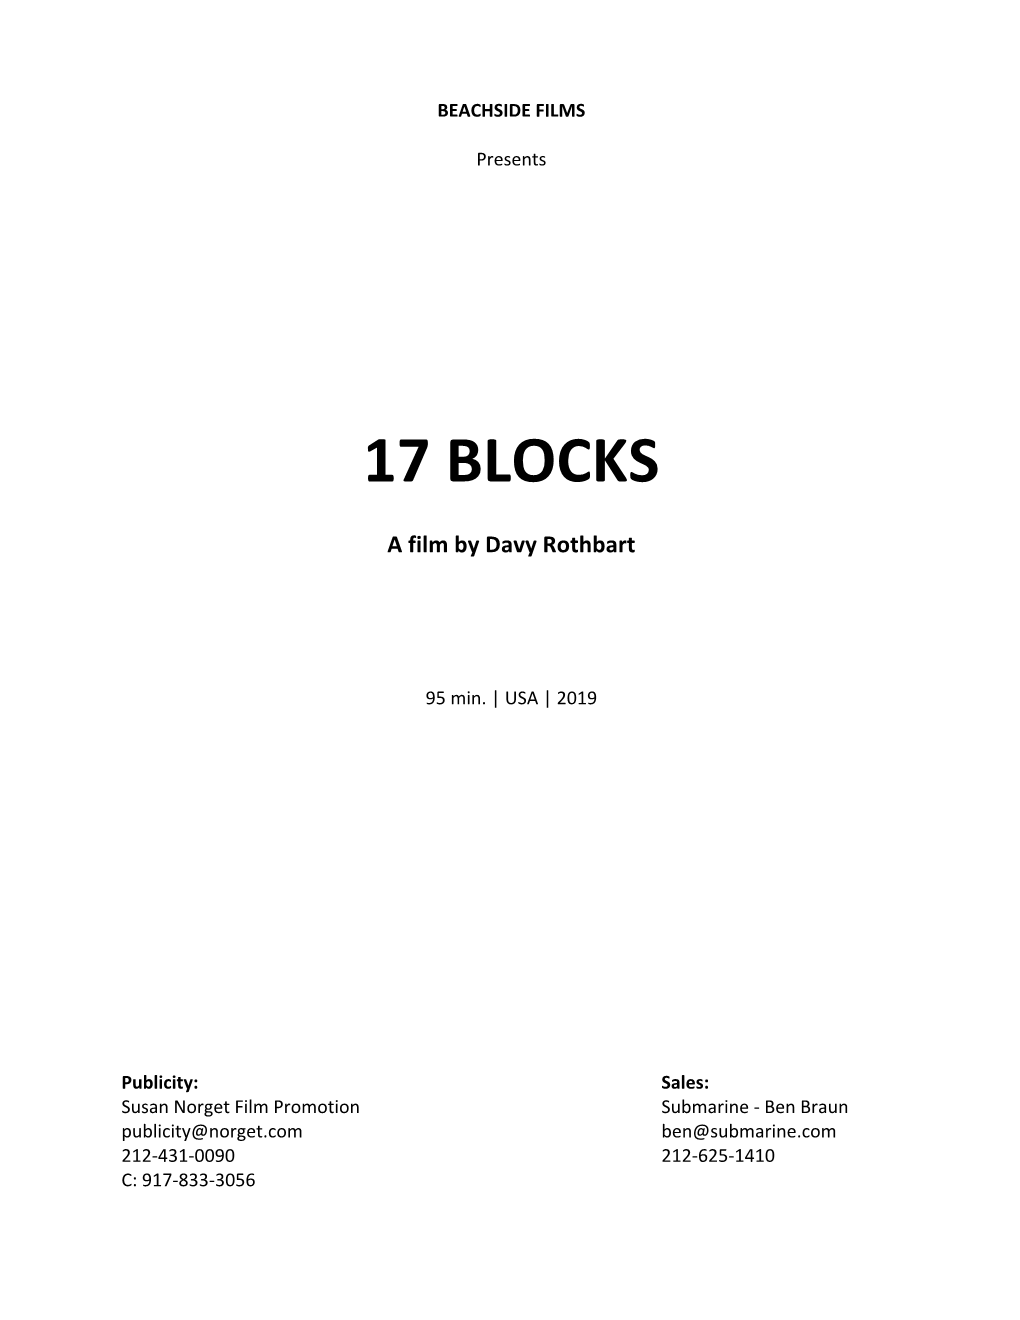 17 BLOCKS a Film by Davy Rothbart